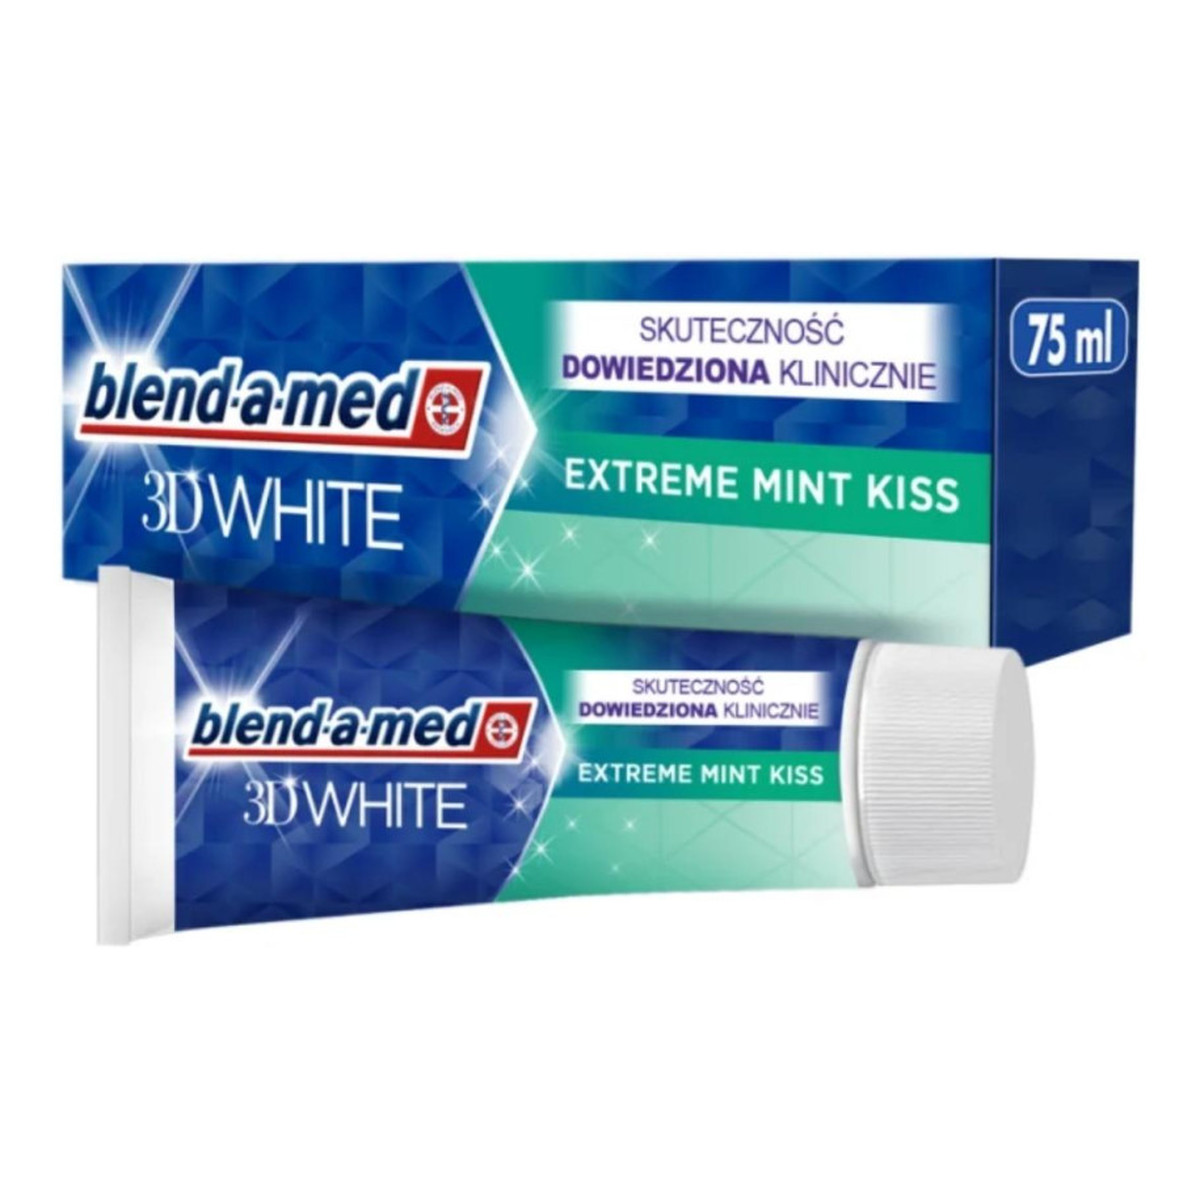 Blend-a-med 3D White Pasta do zębów Extreme Mint Kiss 75ml